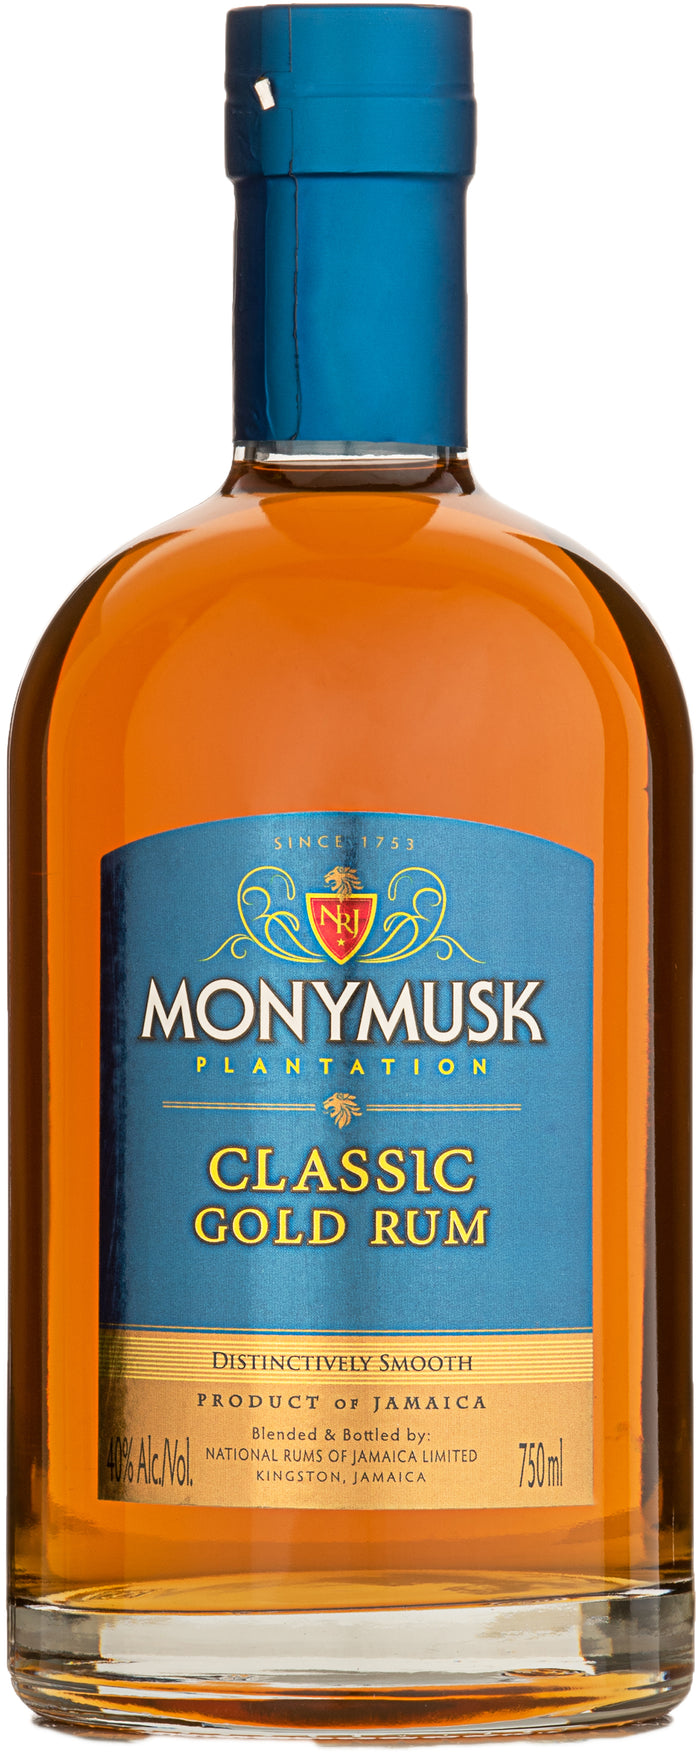 Monymusk Plantation Classic Gold Rum